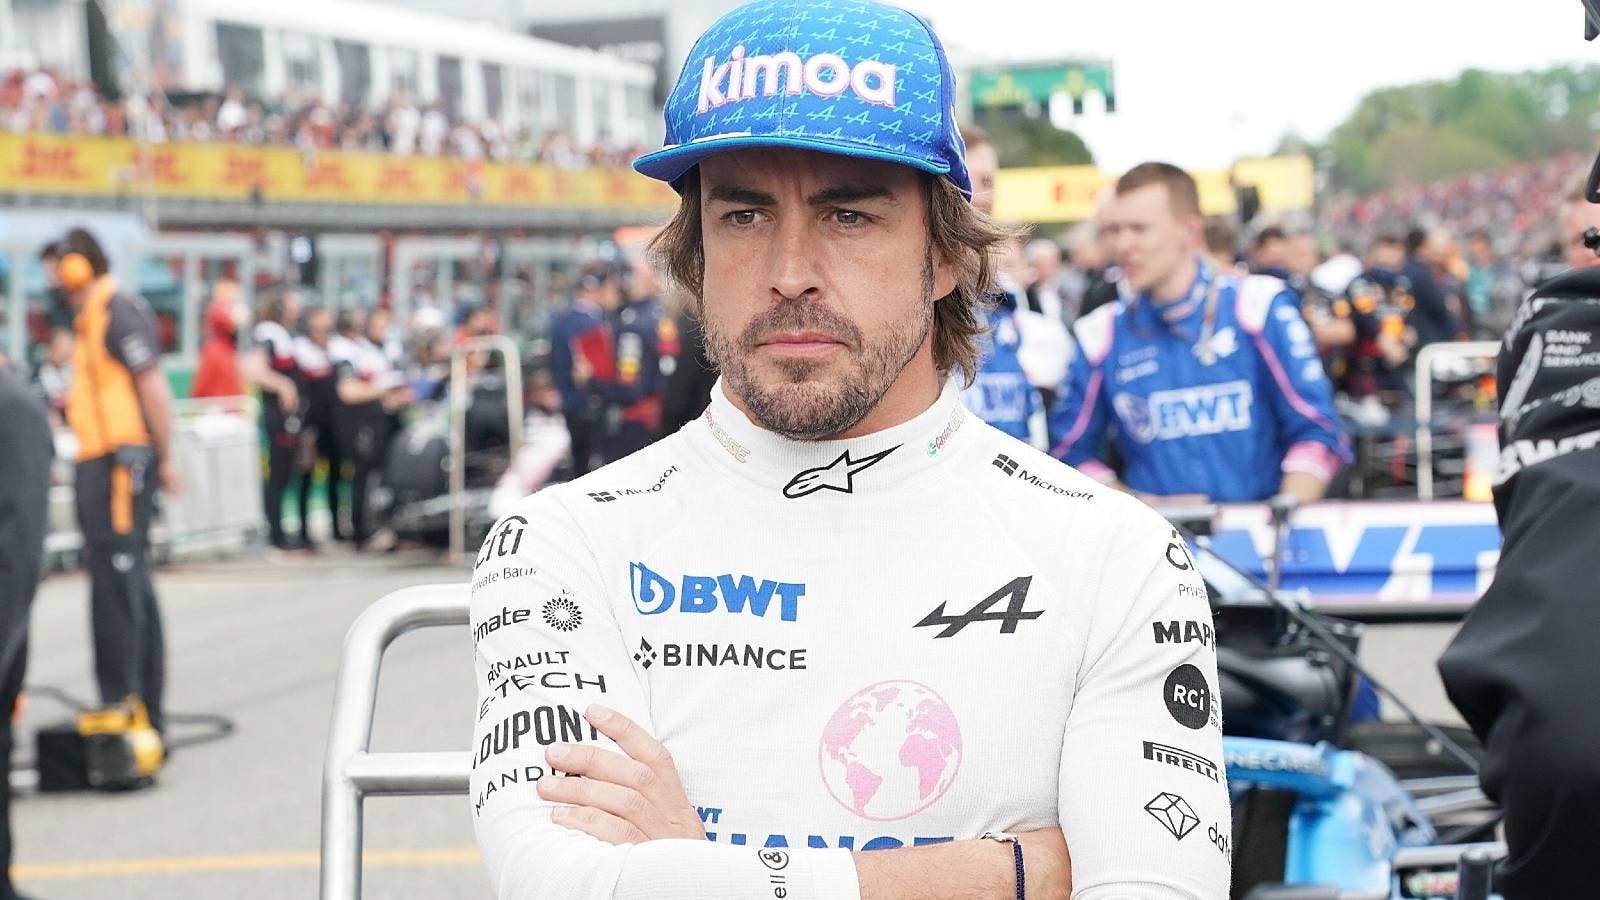 Fernando Alonso's spectacular helmet at the Singapore GP
